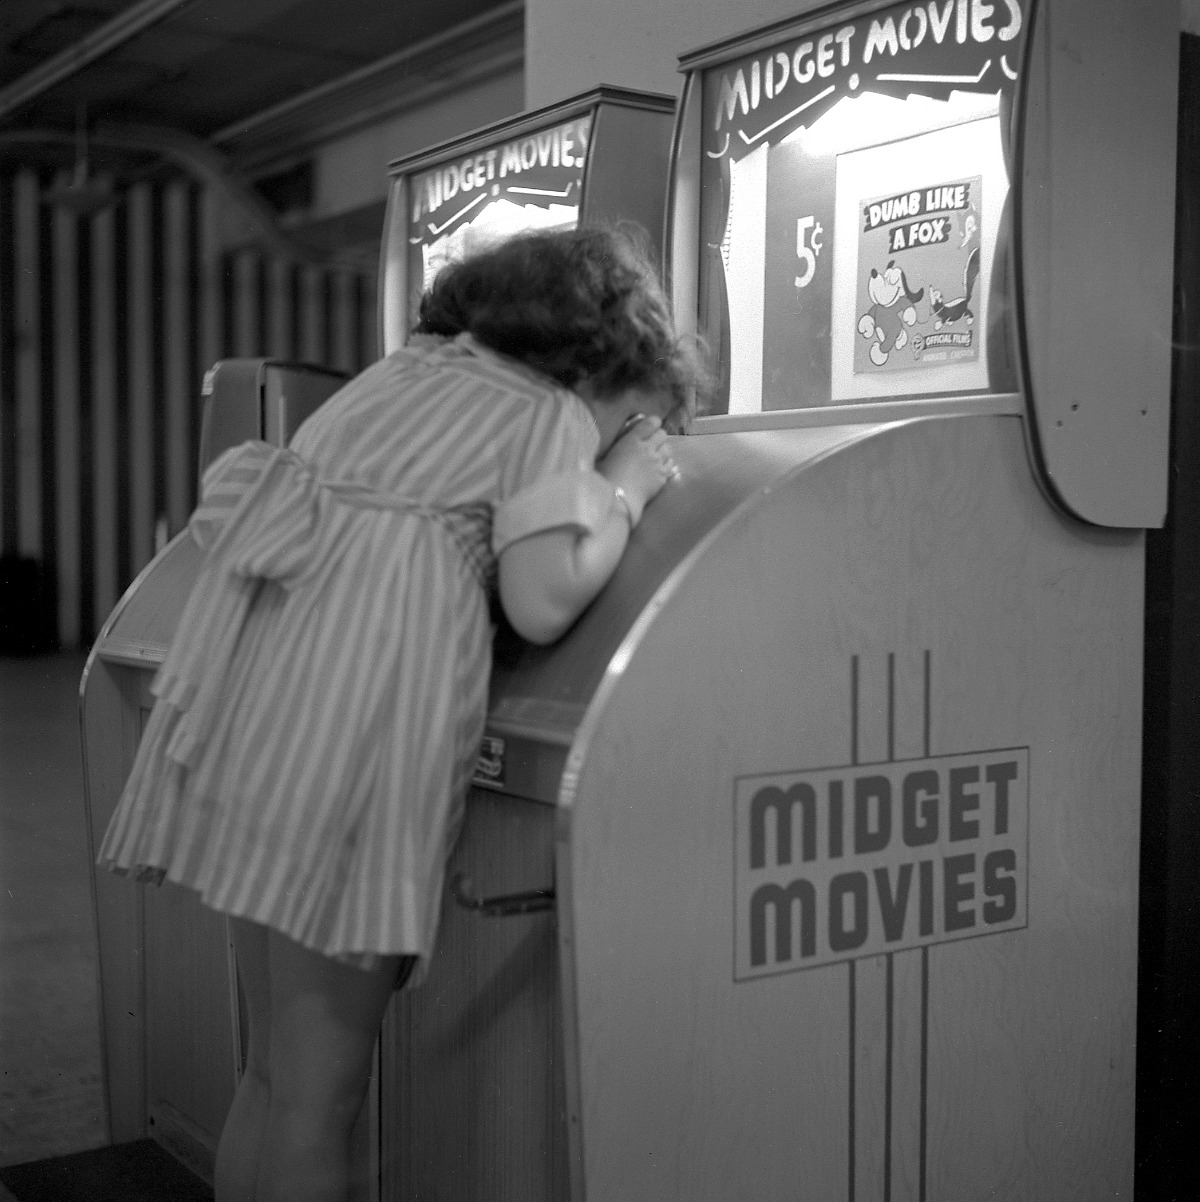 At the arcade, Coney Island, New York, c. 1946-1950